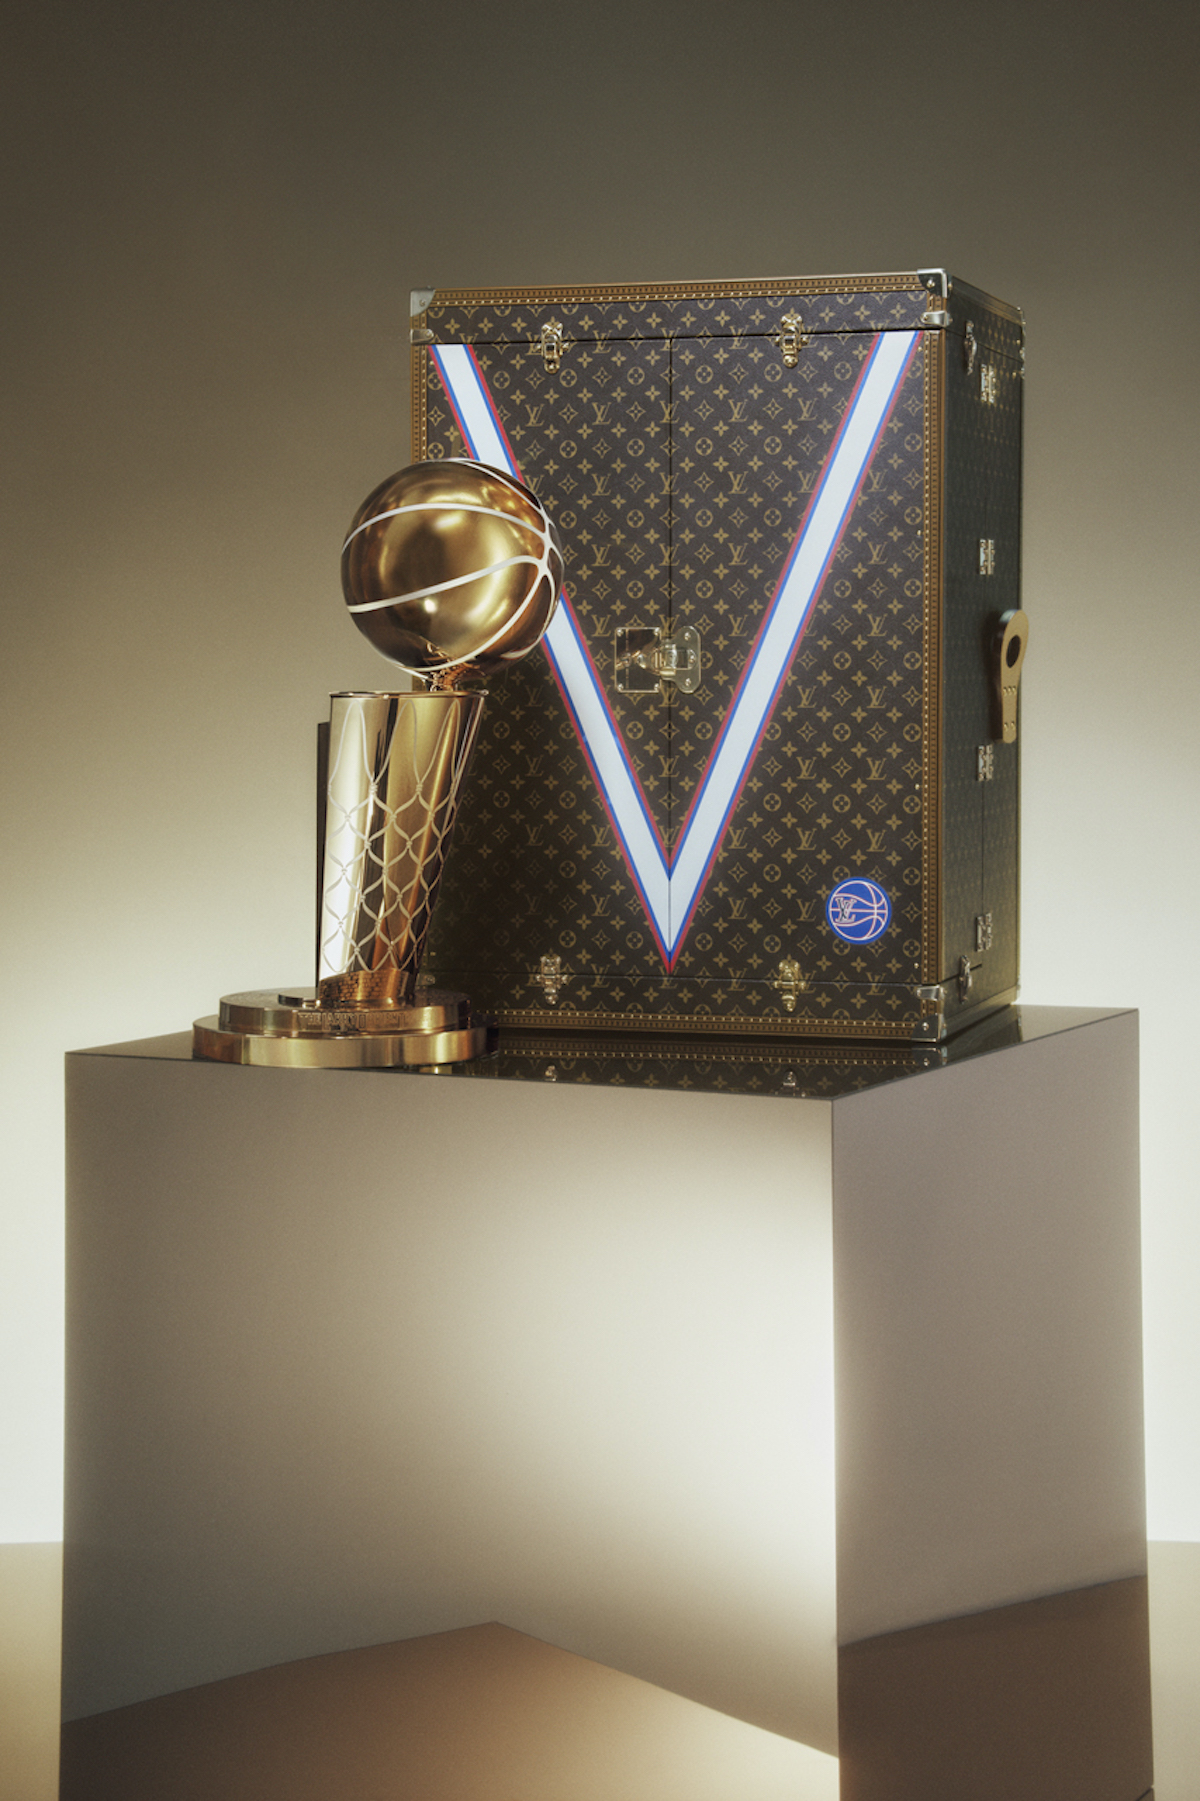 Louis Vuitton Launches LV x NBA Capsule Collection